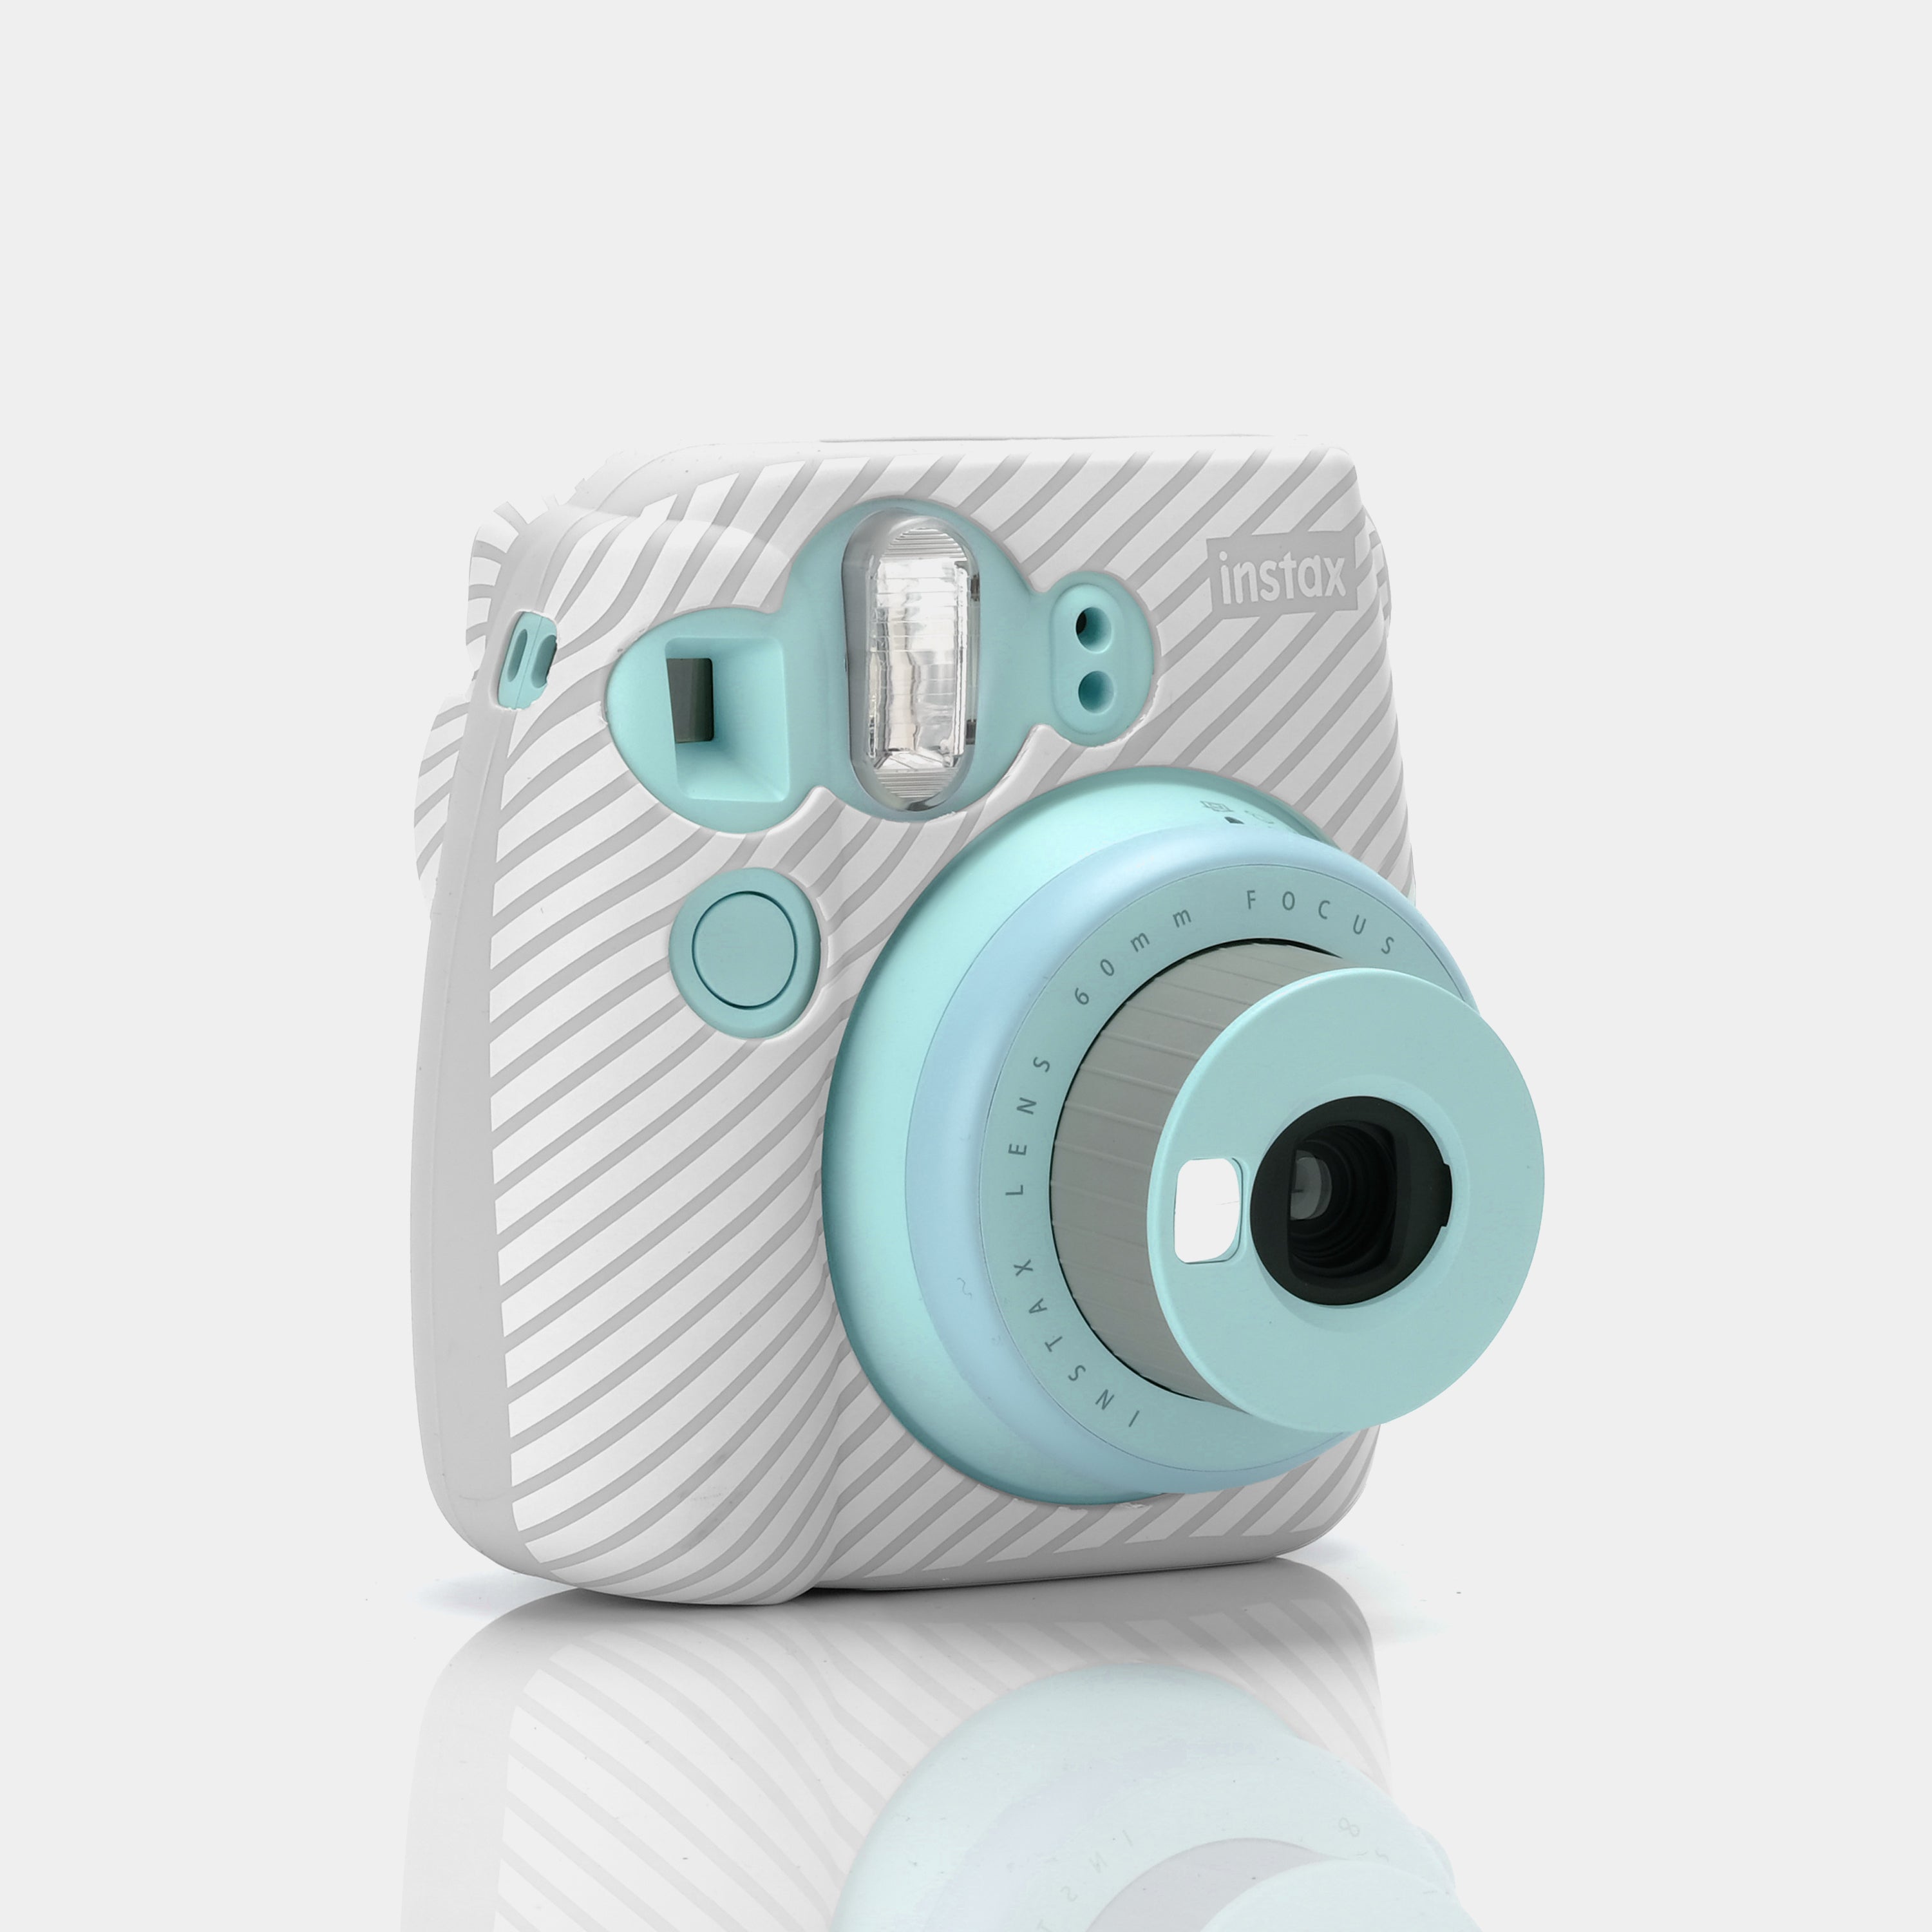 Fujifilm Instax Mini 9 Blue Instant Film Camera With Stripes - Refurbished